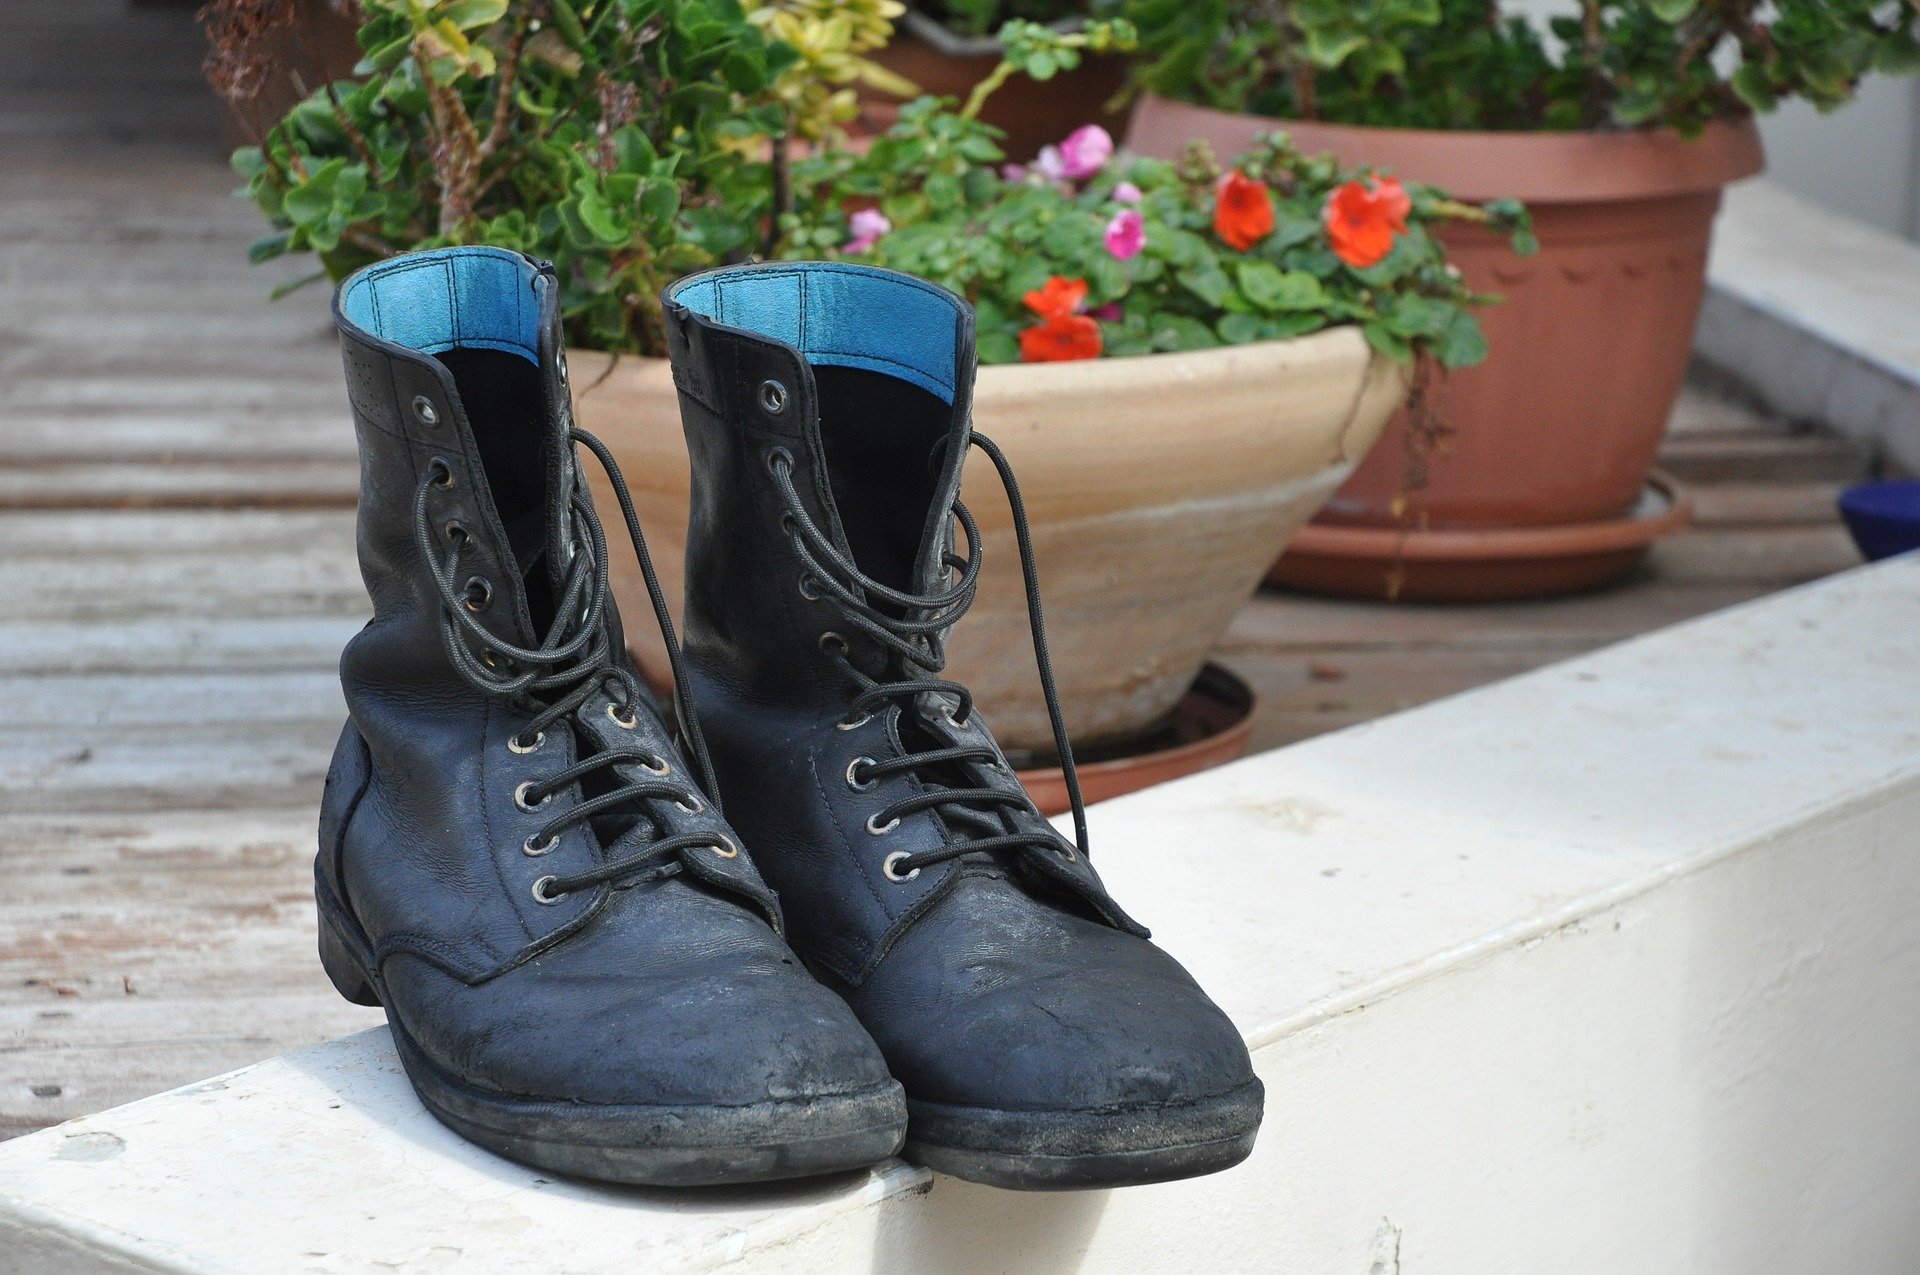 A pair of black boots. | Photo: Pixabay/eyal yassure 